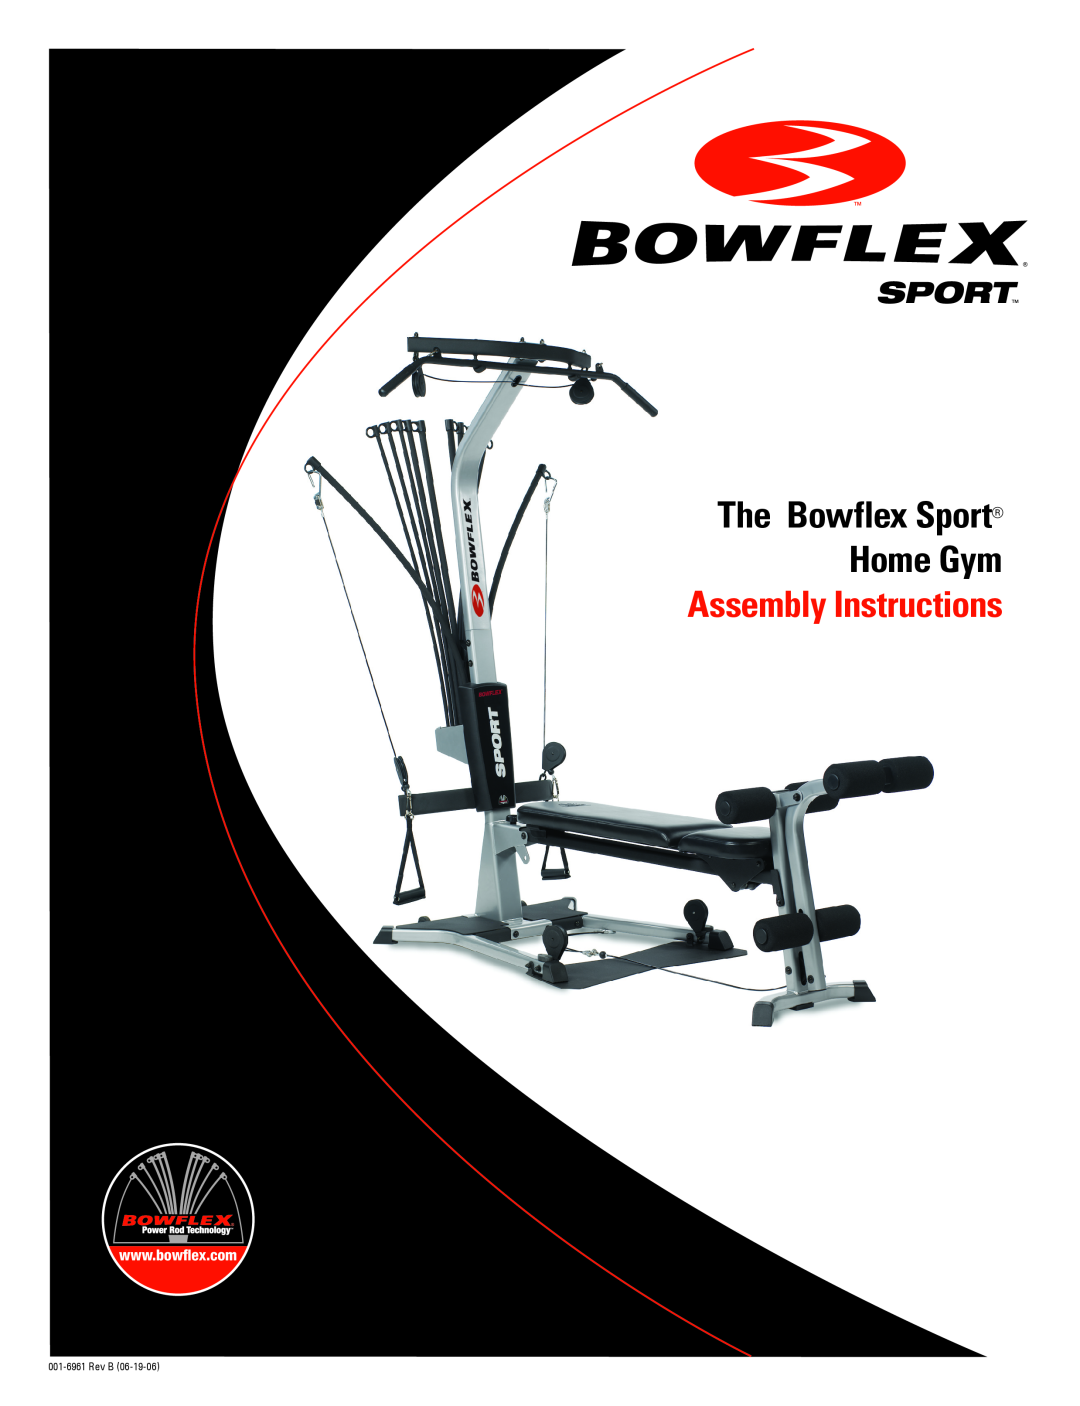 Bowflex 001-6961 manual The Bowflex Sport Home Gym, Assembly Instructions 